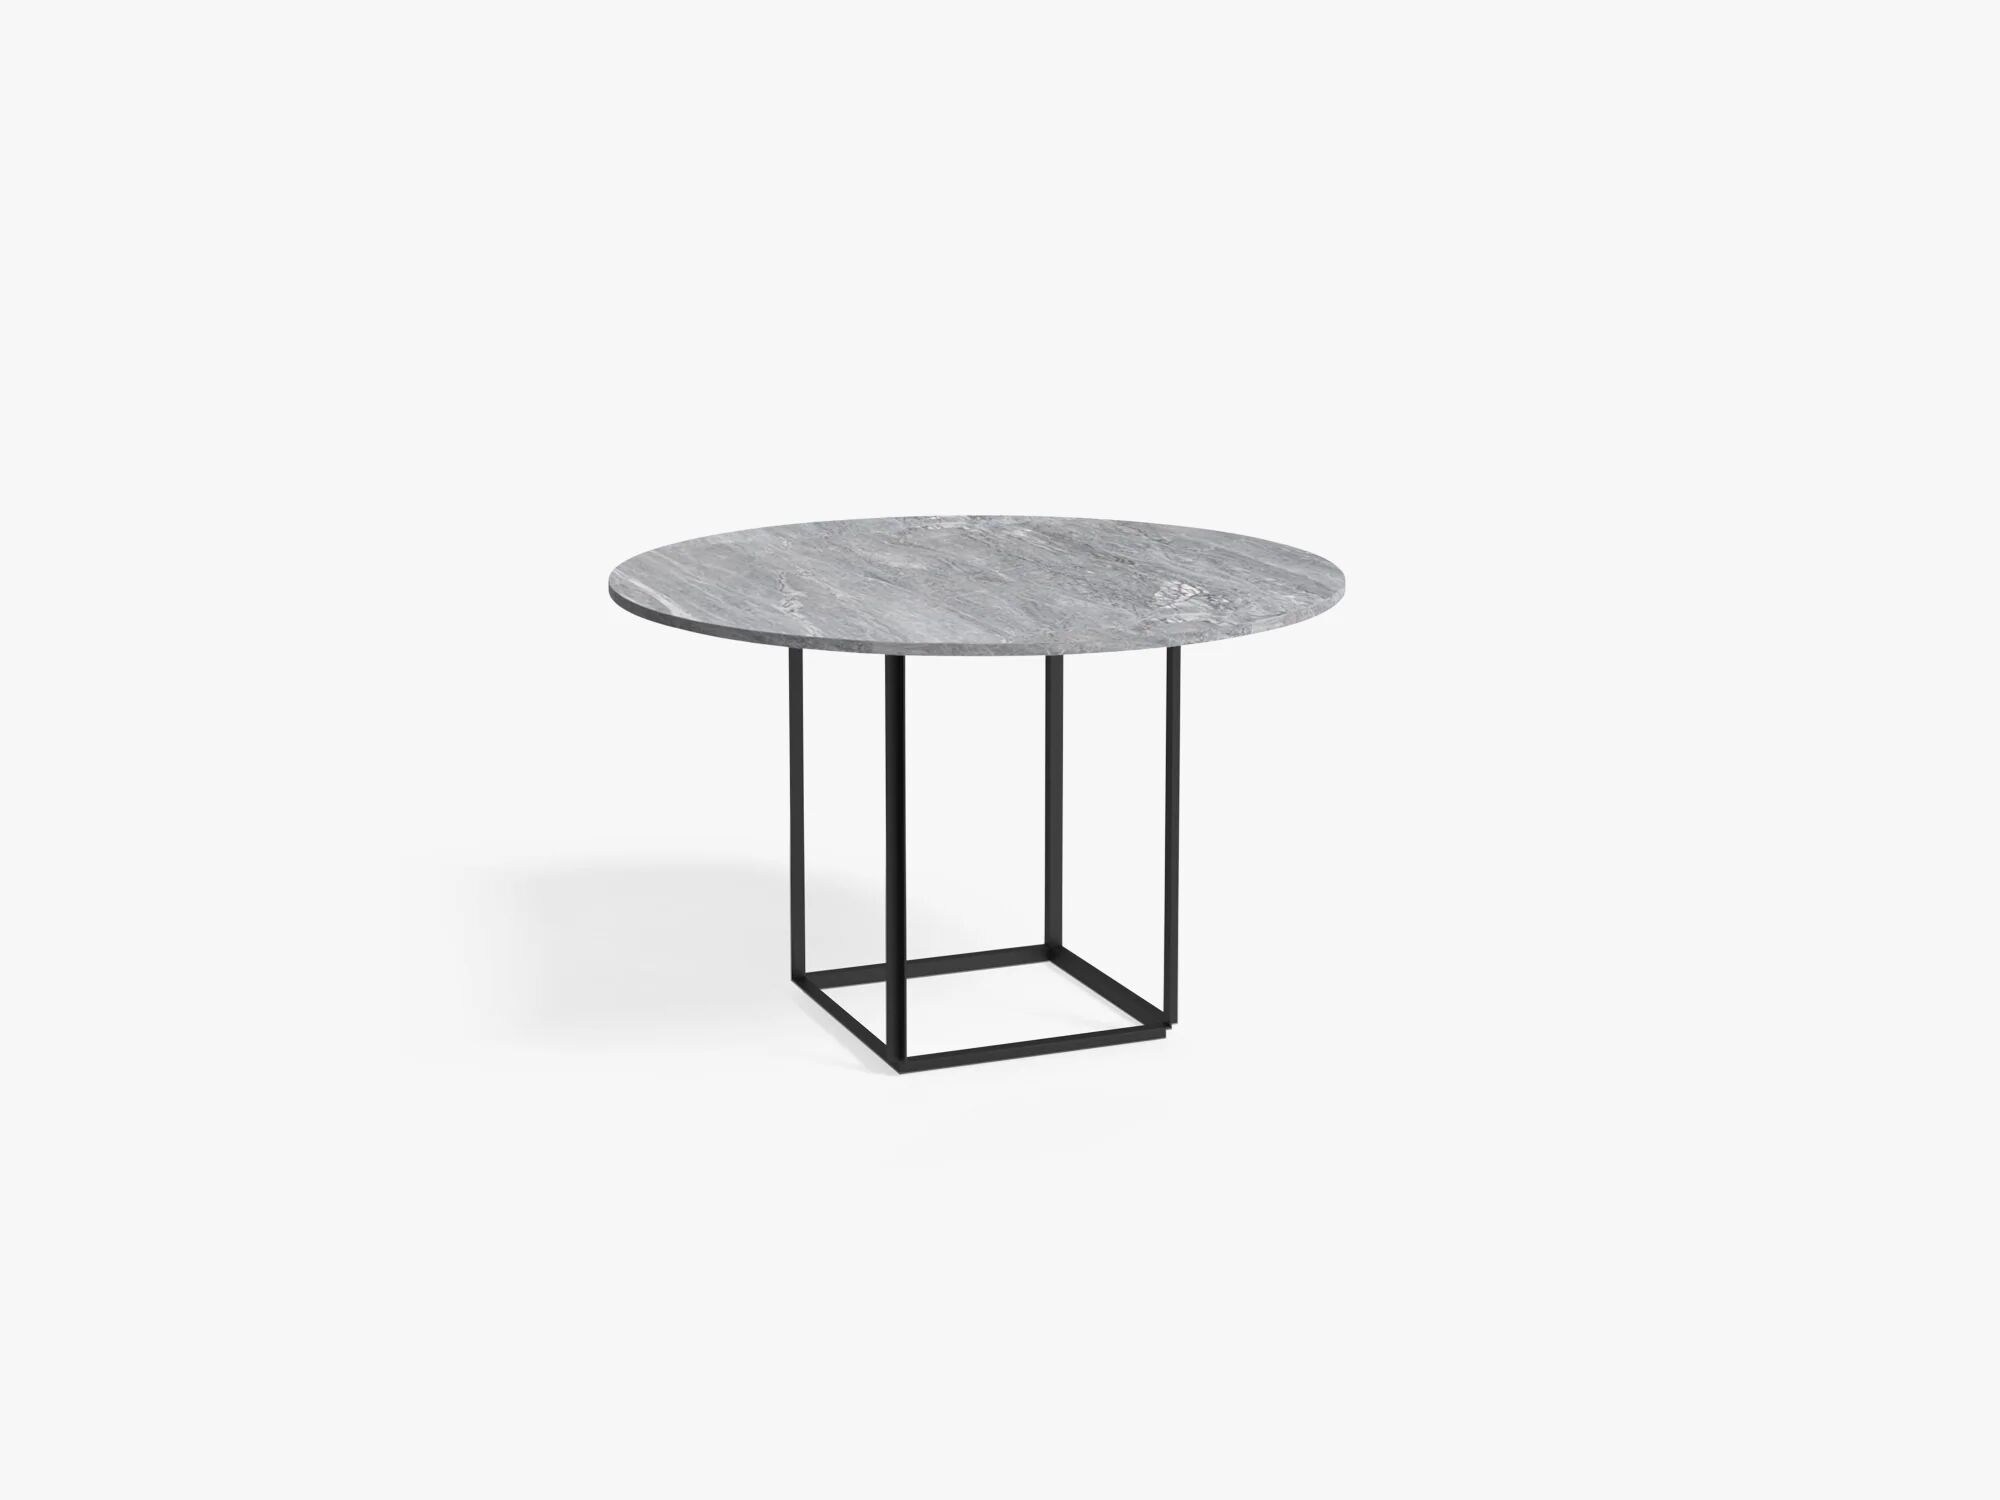 New Works Firenze spisebordø120, grå ruivina marmor / svart ramme